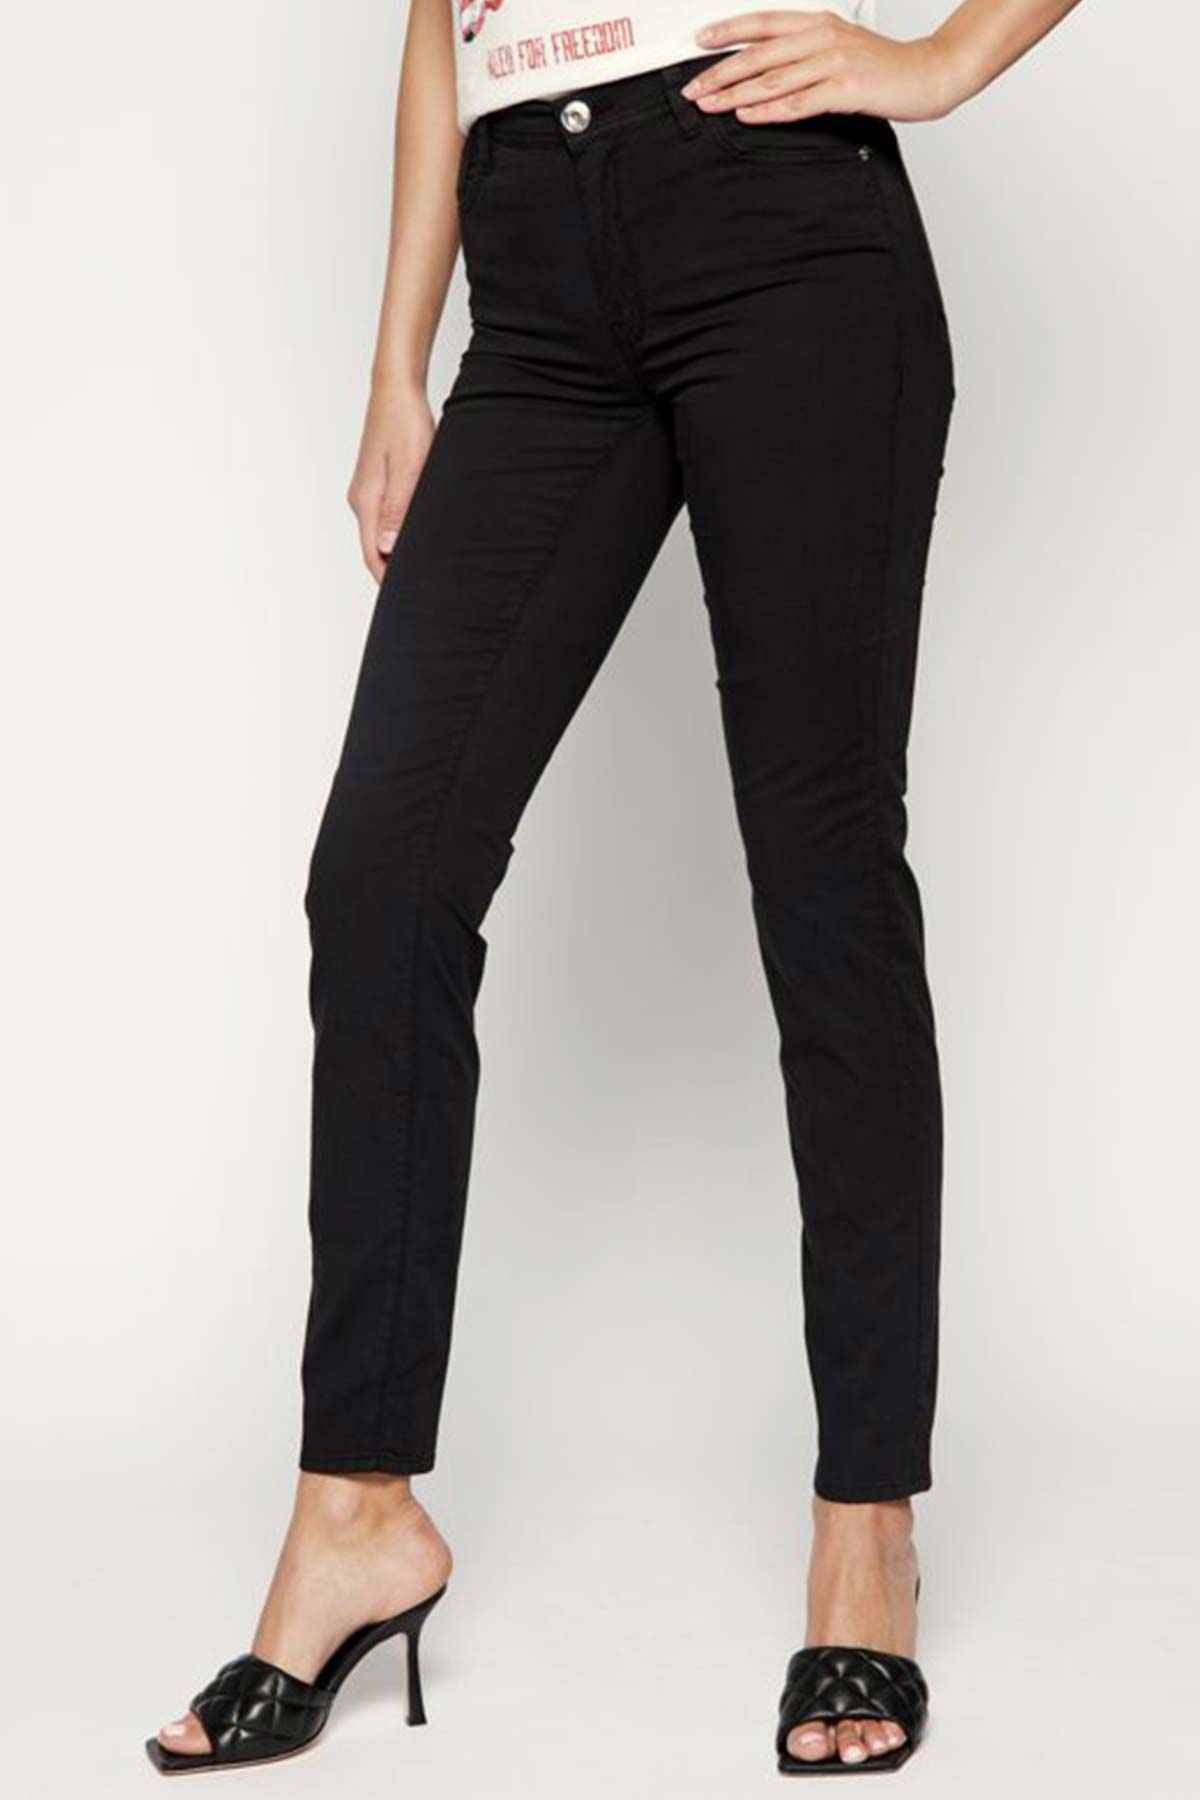 Trussardi Jeans Skinny Fit Pantolon-Libas Trendy Fashion Store